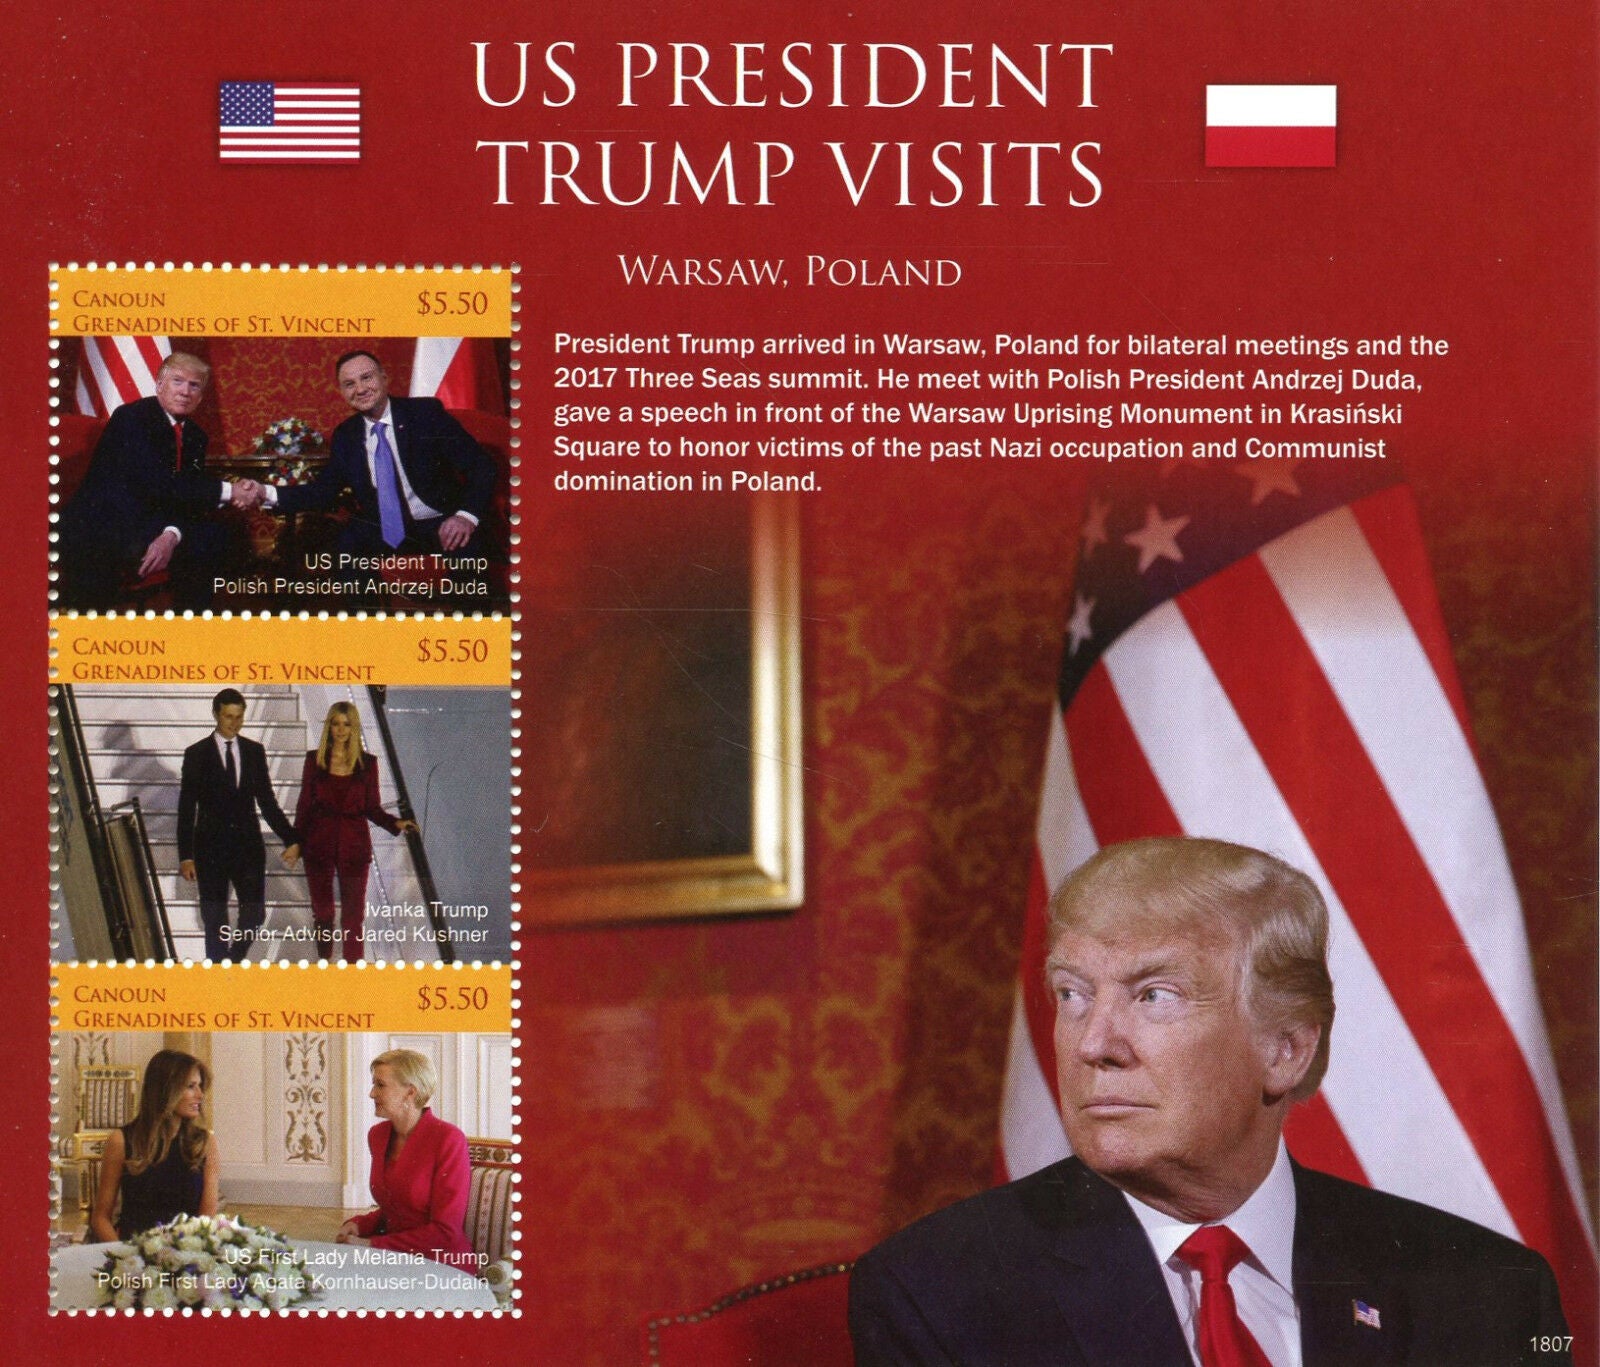 Canouan Gren St Vincent 2018 MNH Donald Trump Stamps US Presidents Poland Politicians 3v M/S